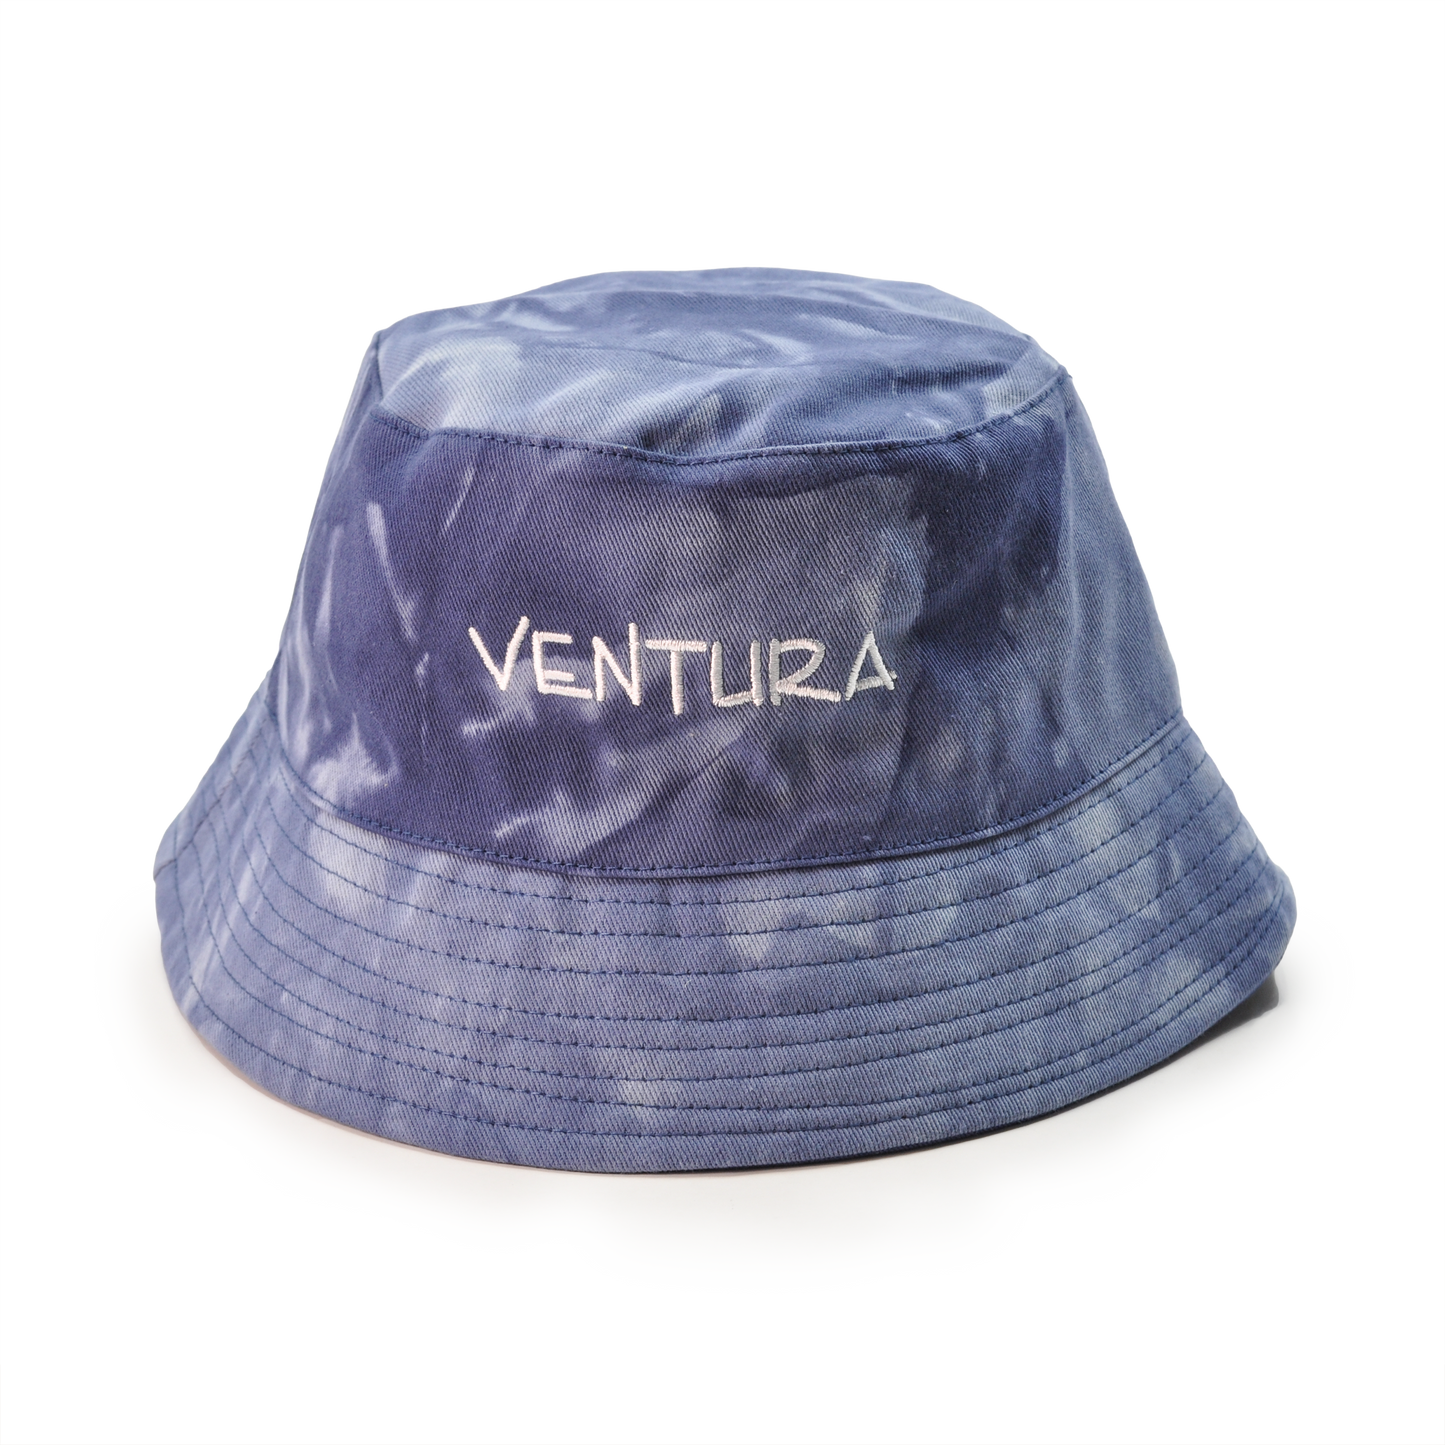 RIVER BEACH®-Reversible Your City Unisex 100% Cotton Packable Summer Travel Tye Dye Bucket Beach Sun Hat Outdoor Cap